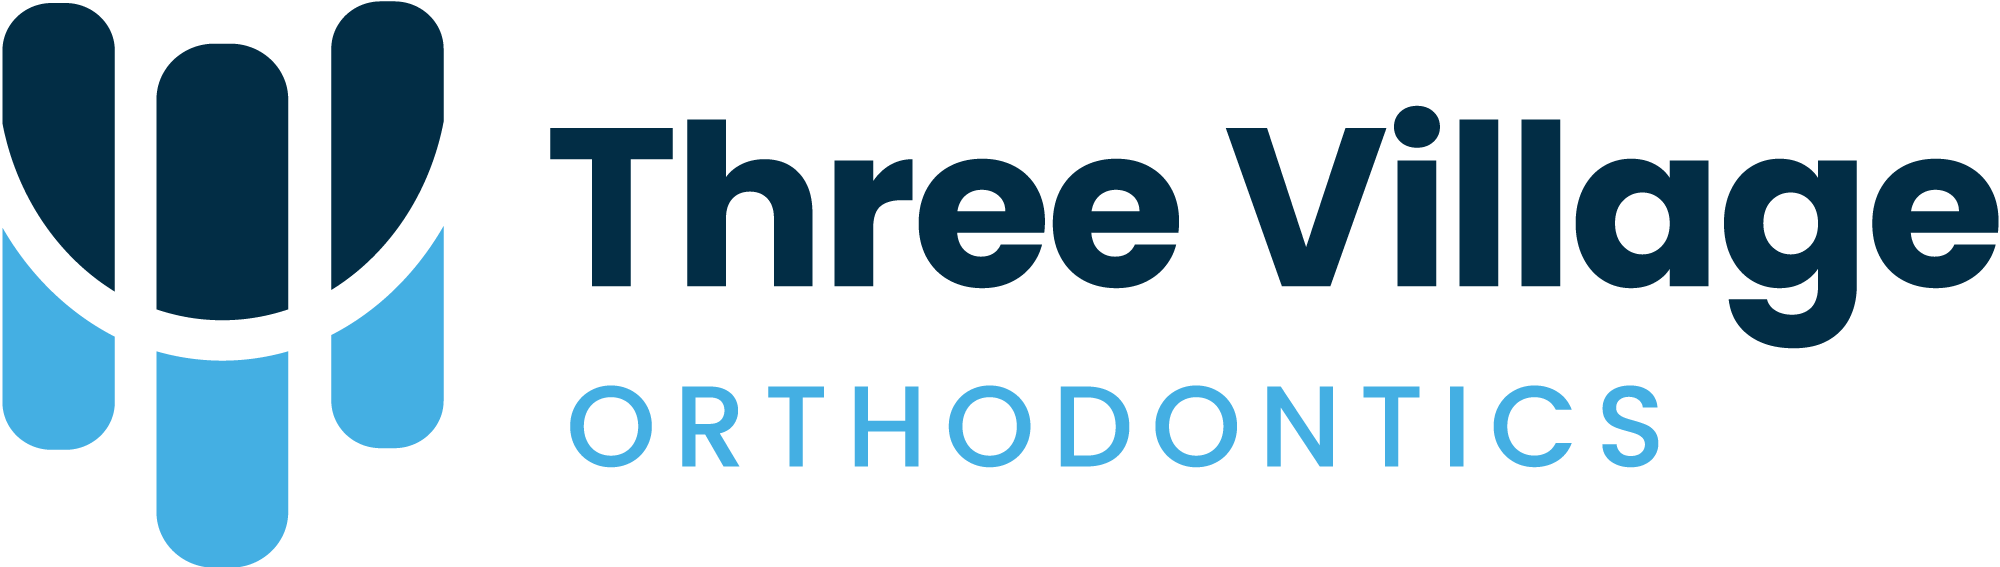 Three Village Orthodontics logo